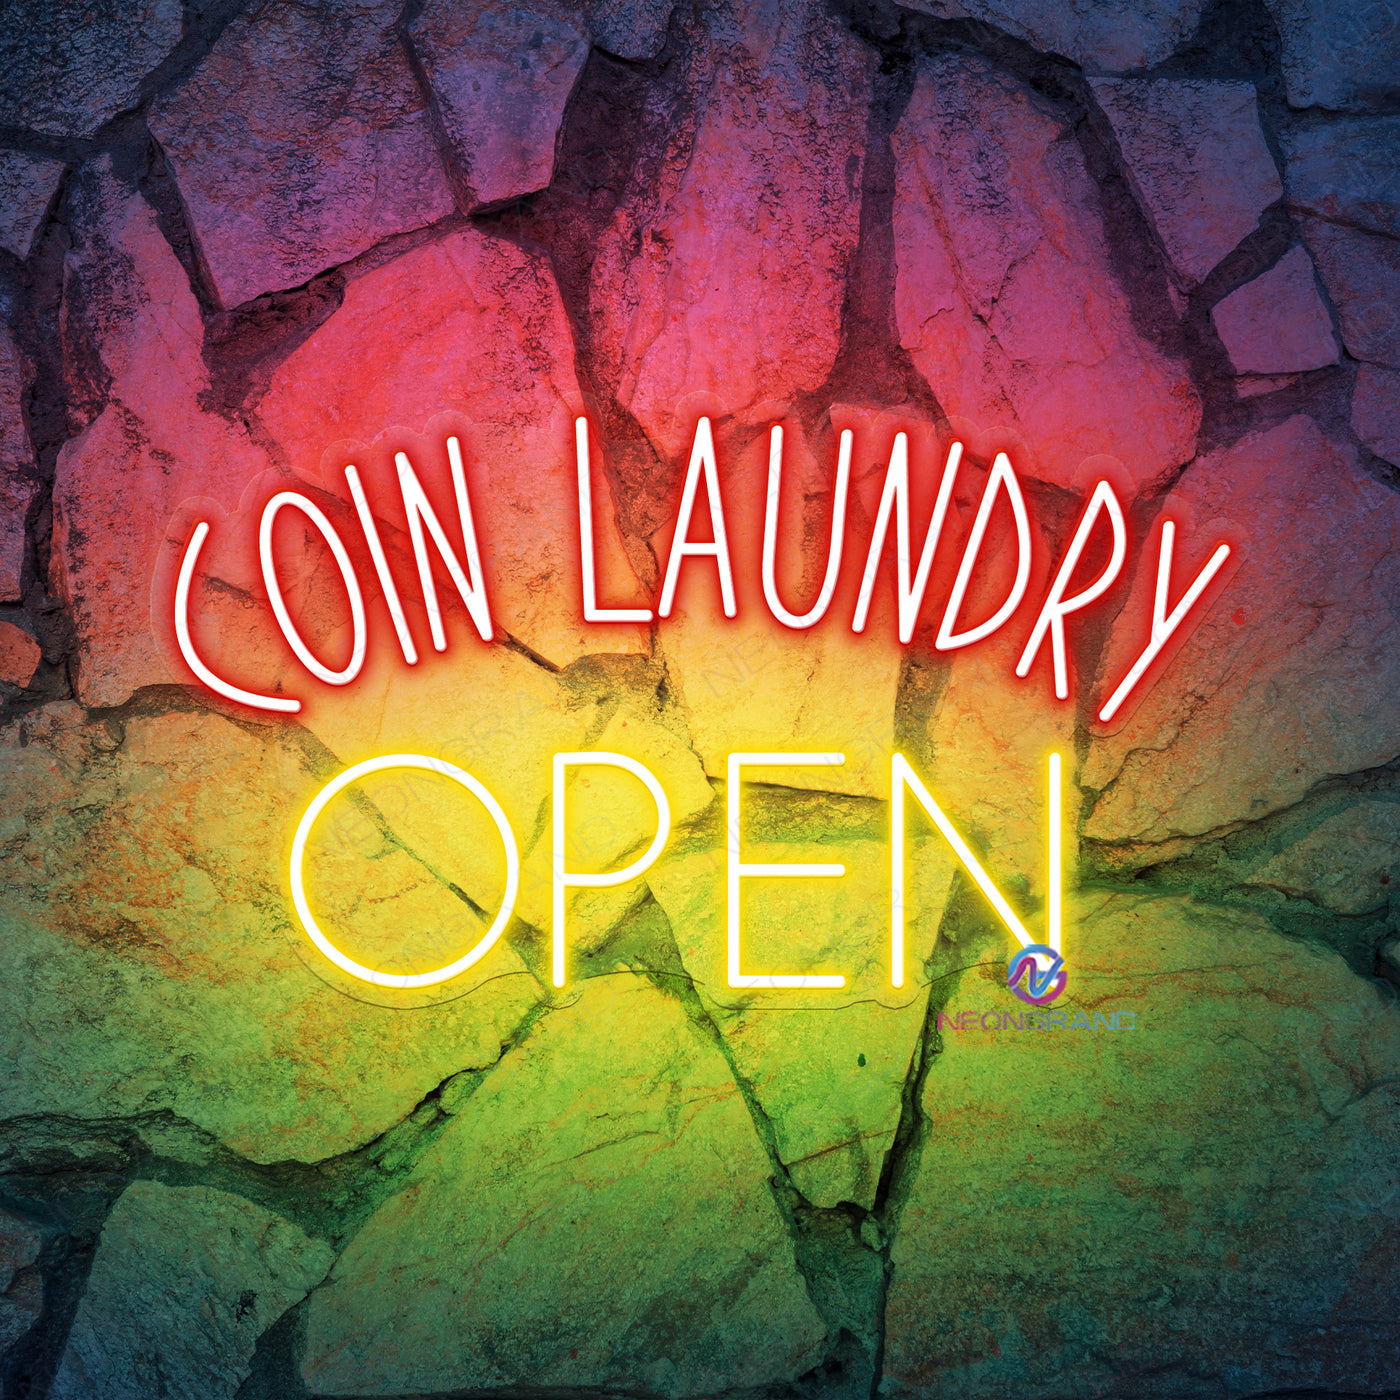 Coin Laundry Open Neon Sign Laundromat Led Light